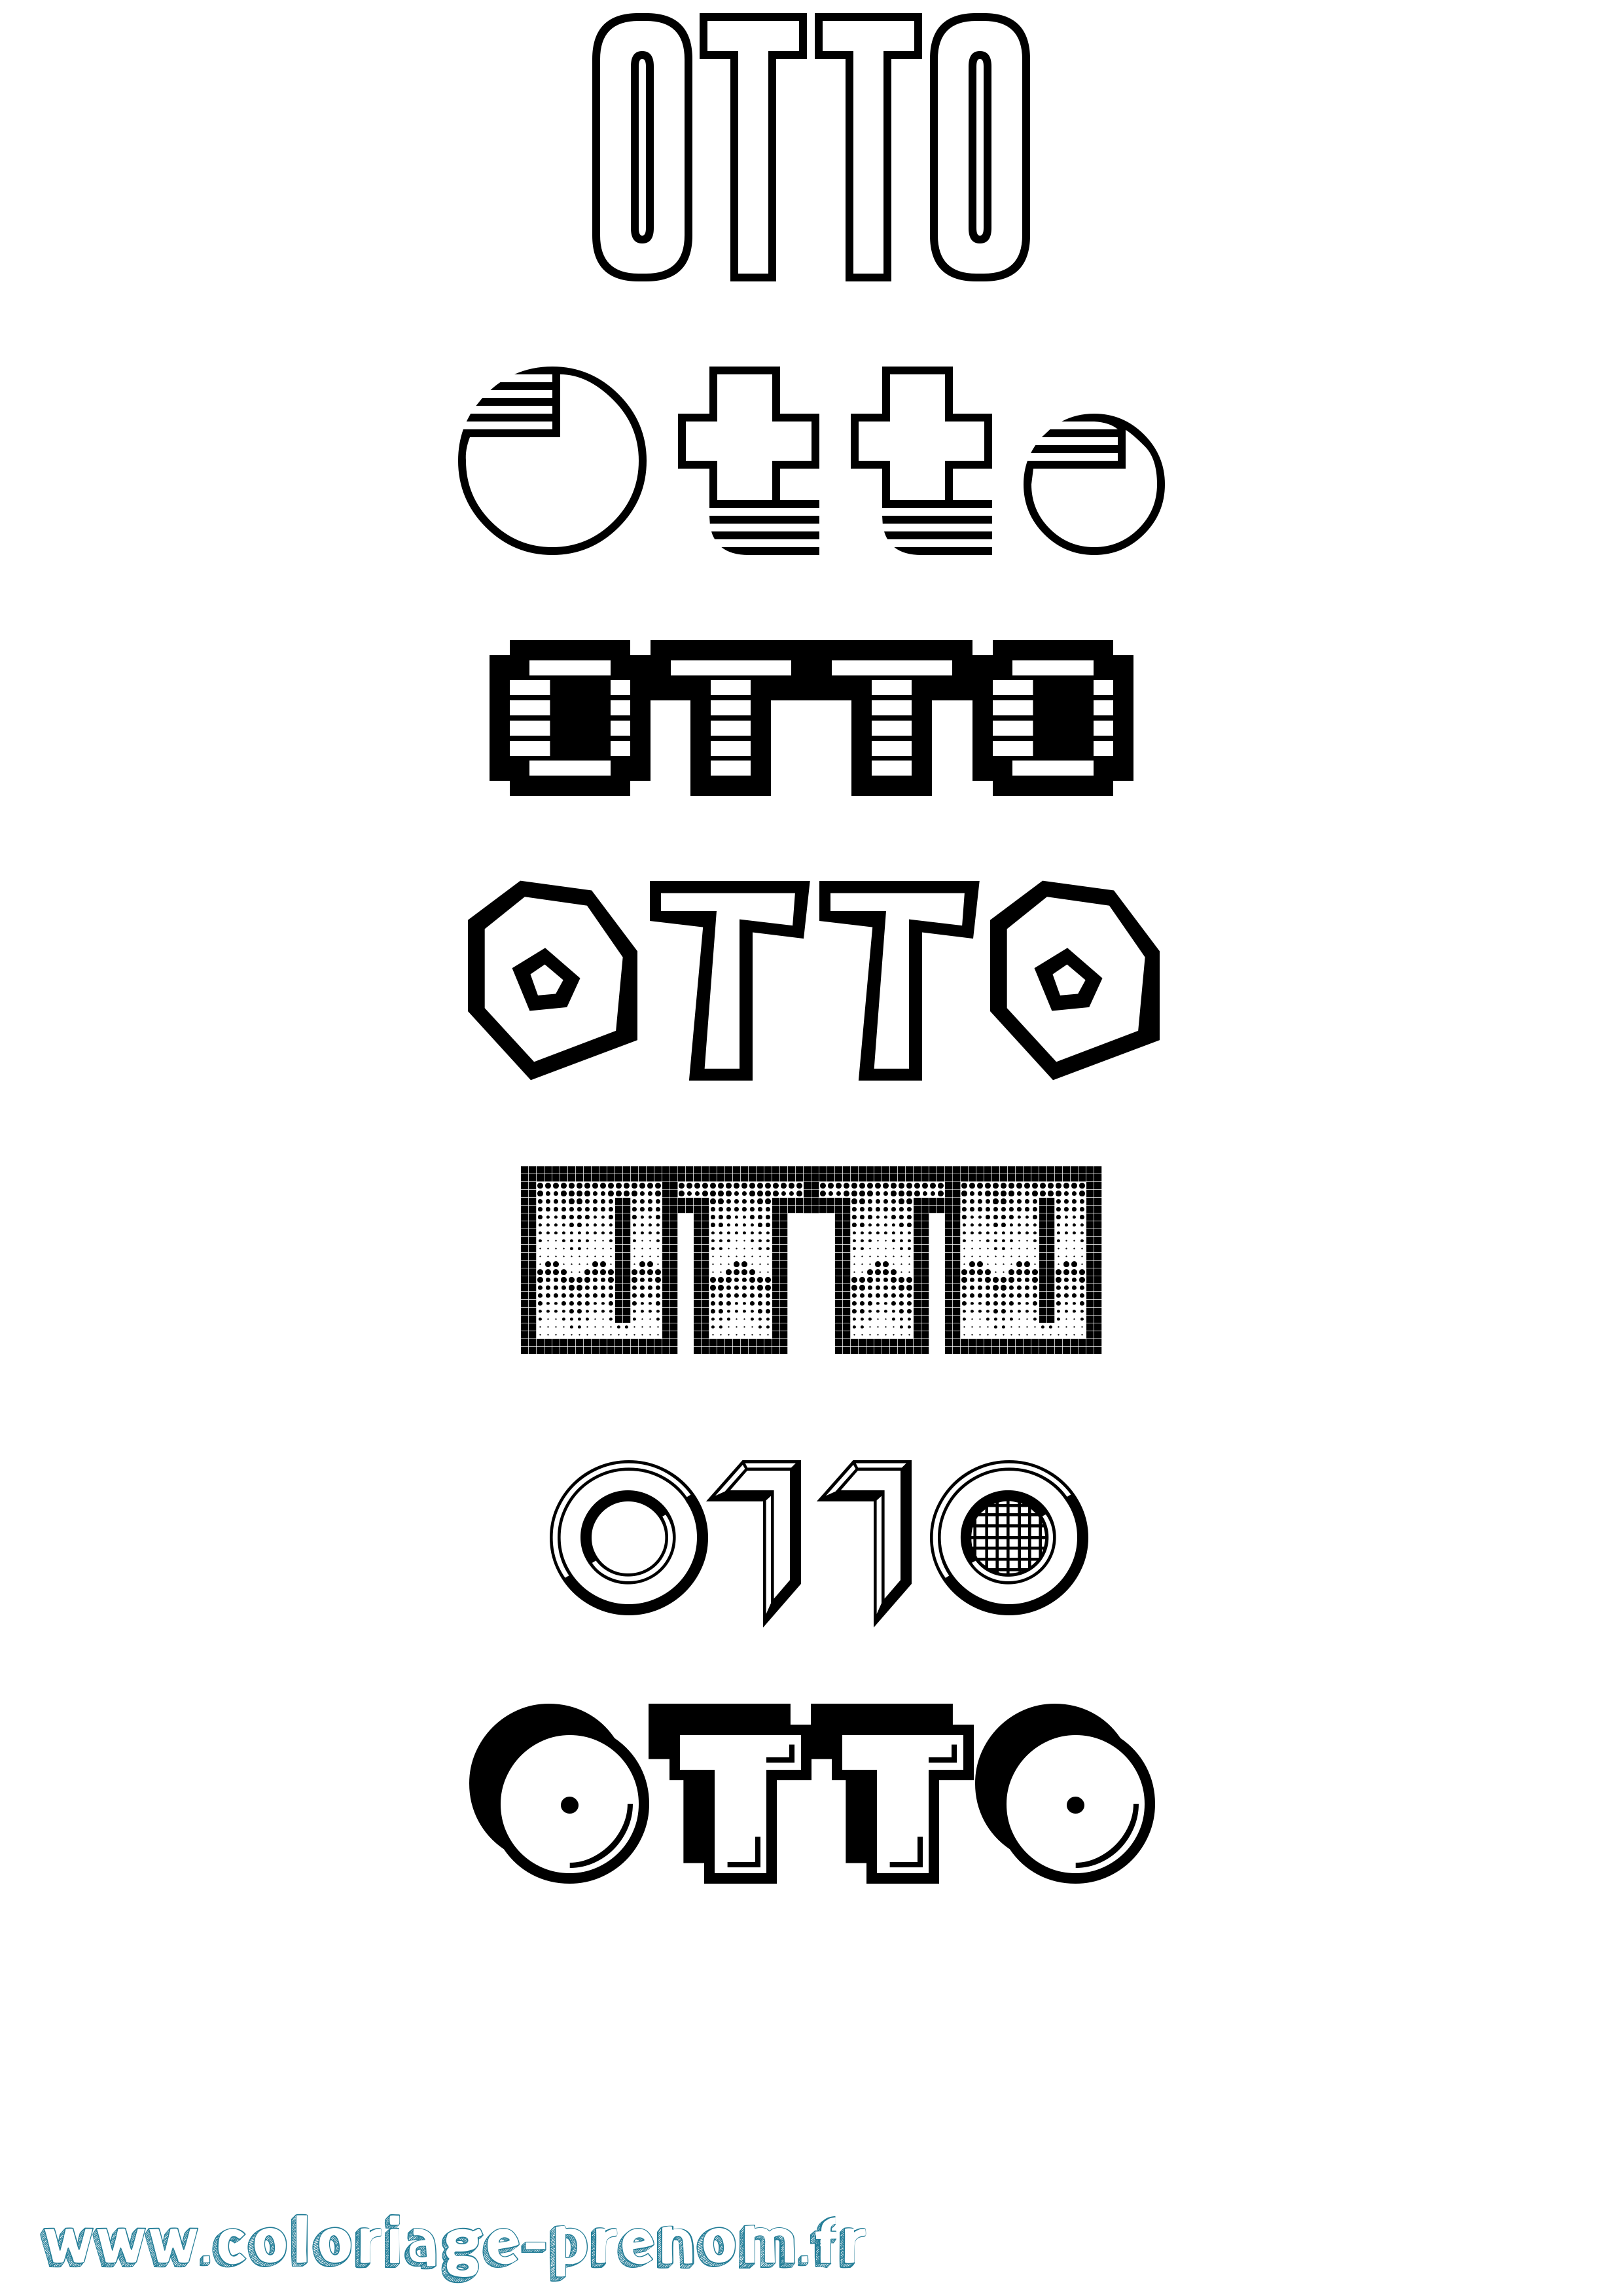 Coloriage prénom Otto